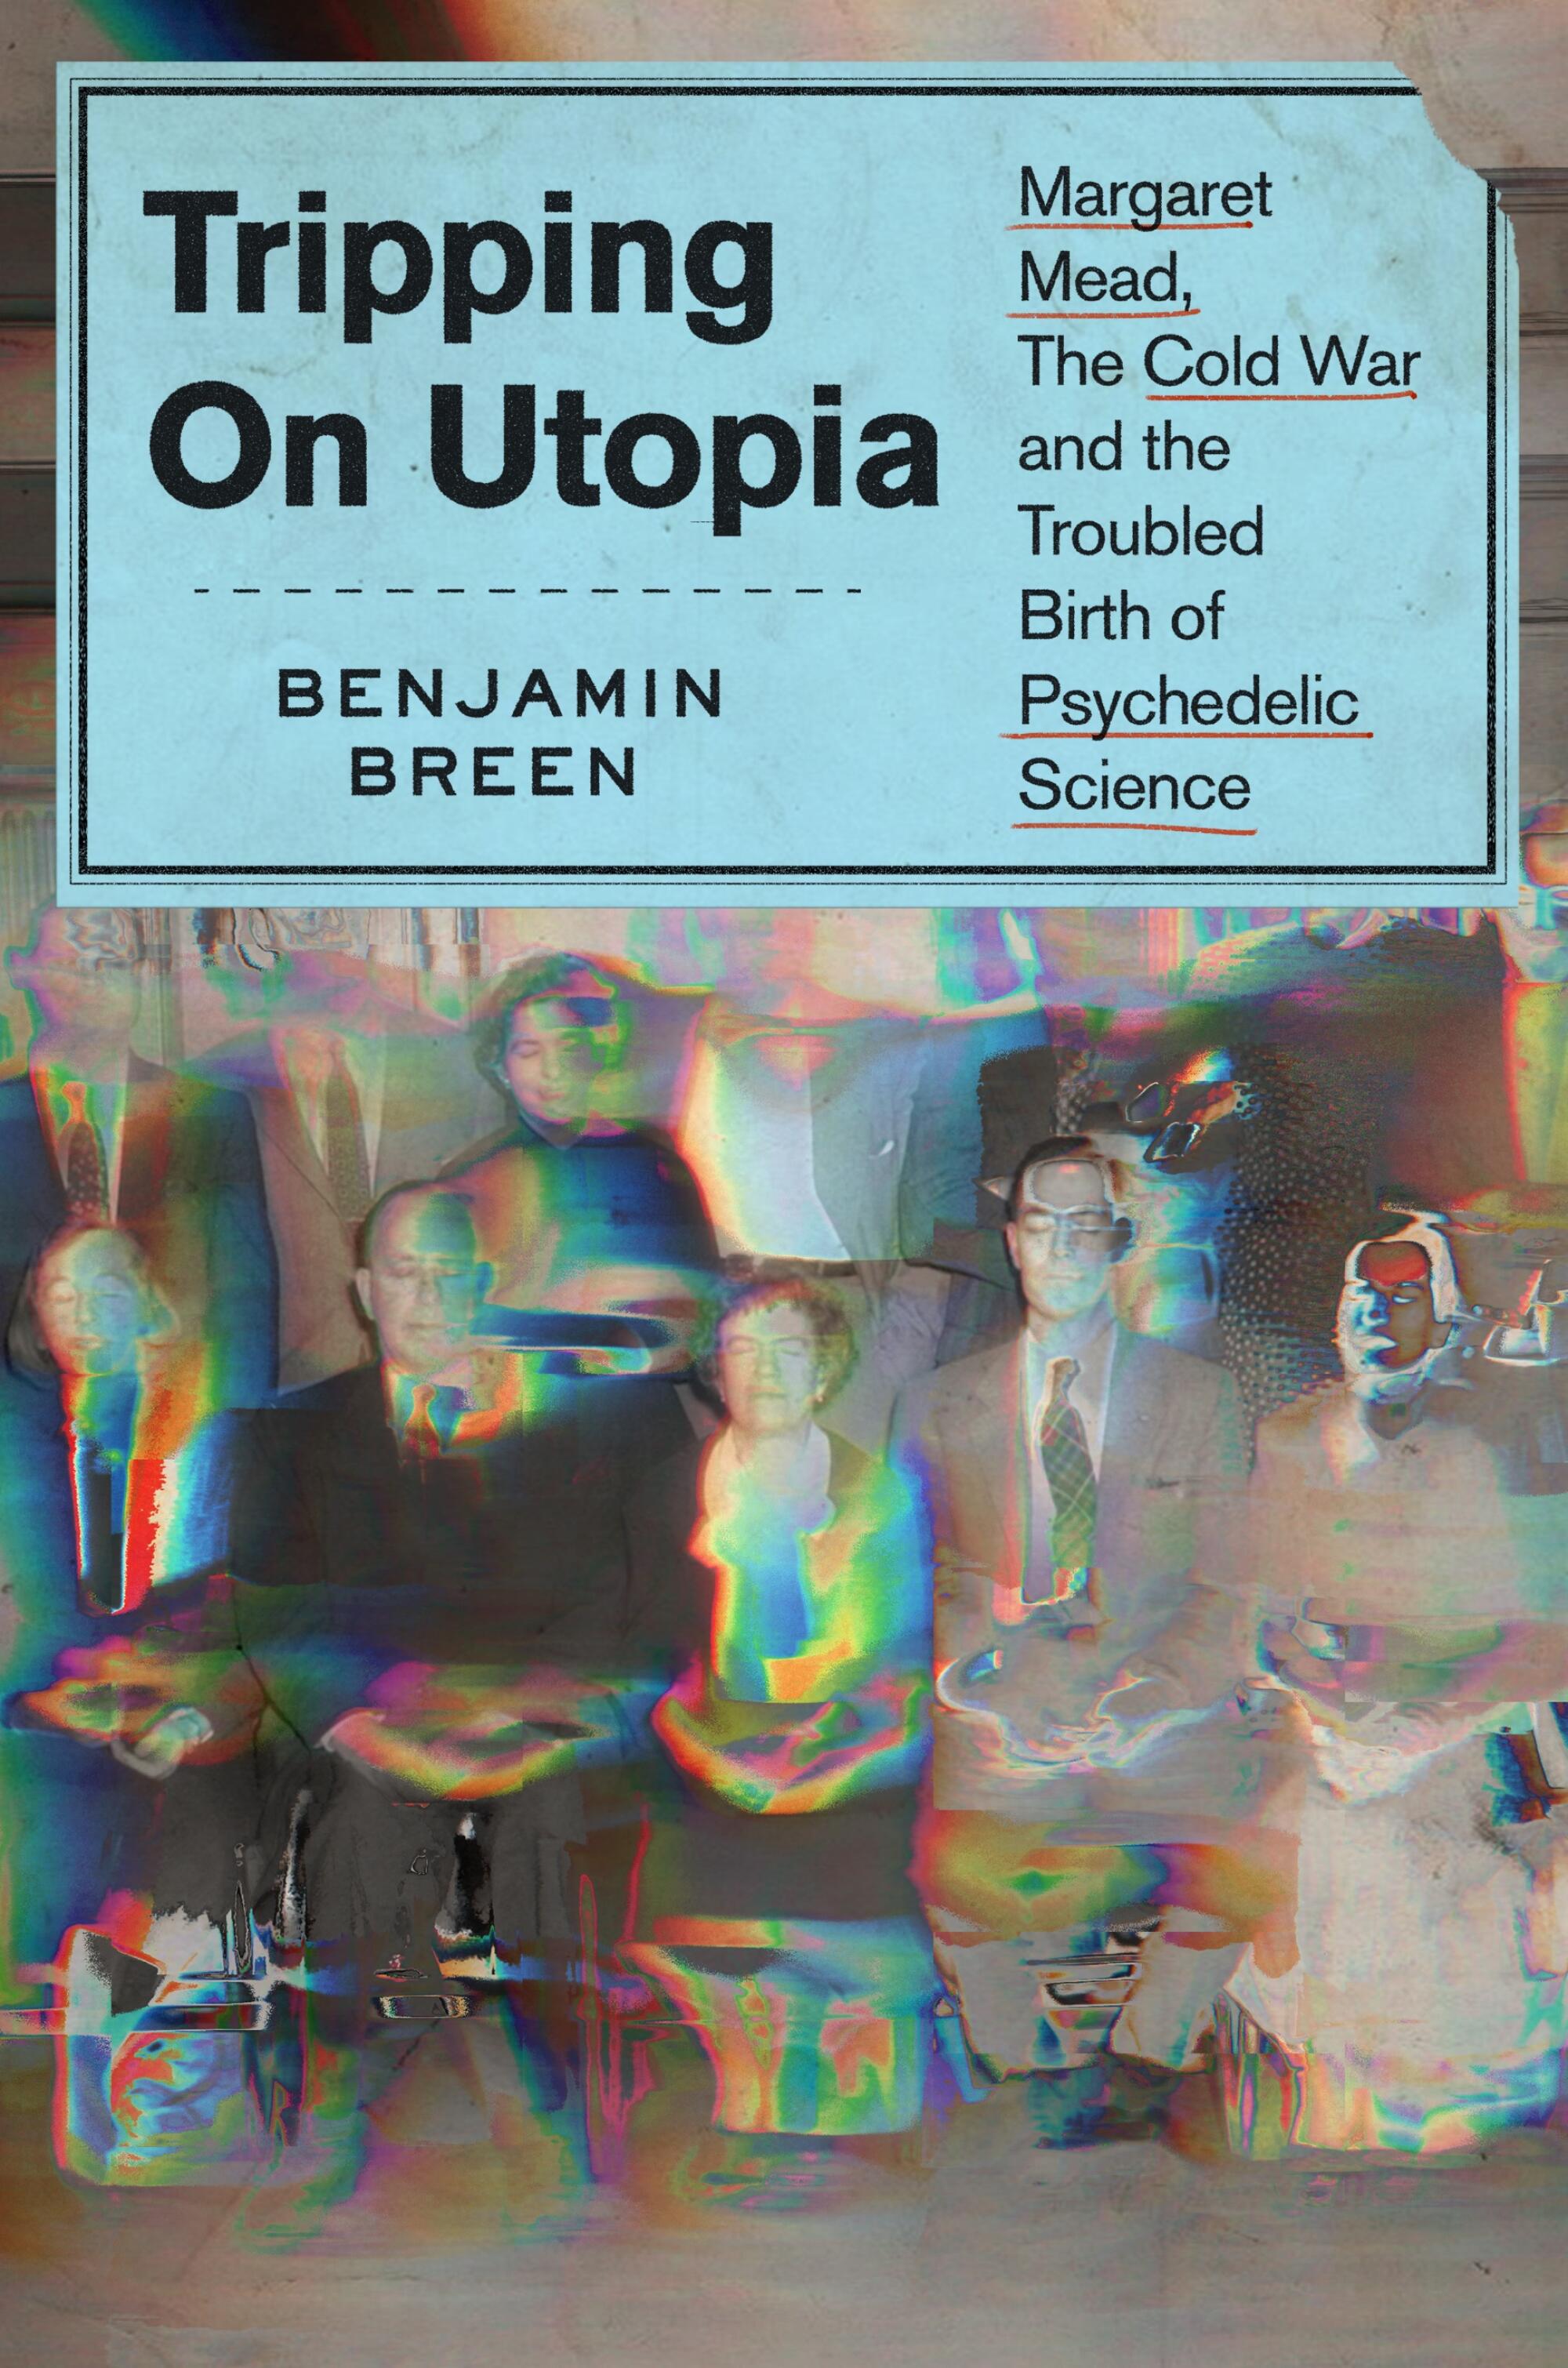 "Tripping on Utopia," by Benjamin Breen